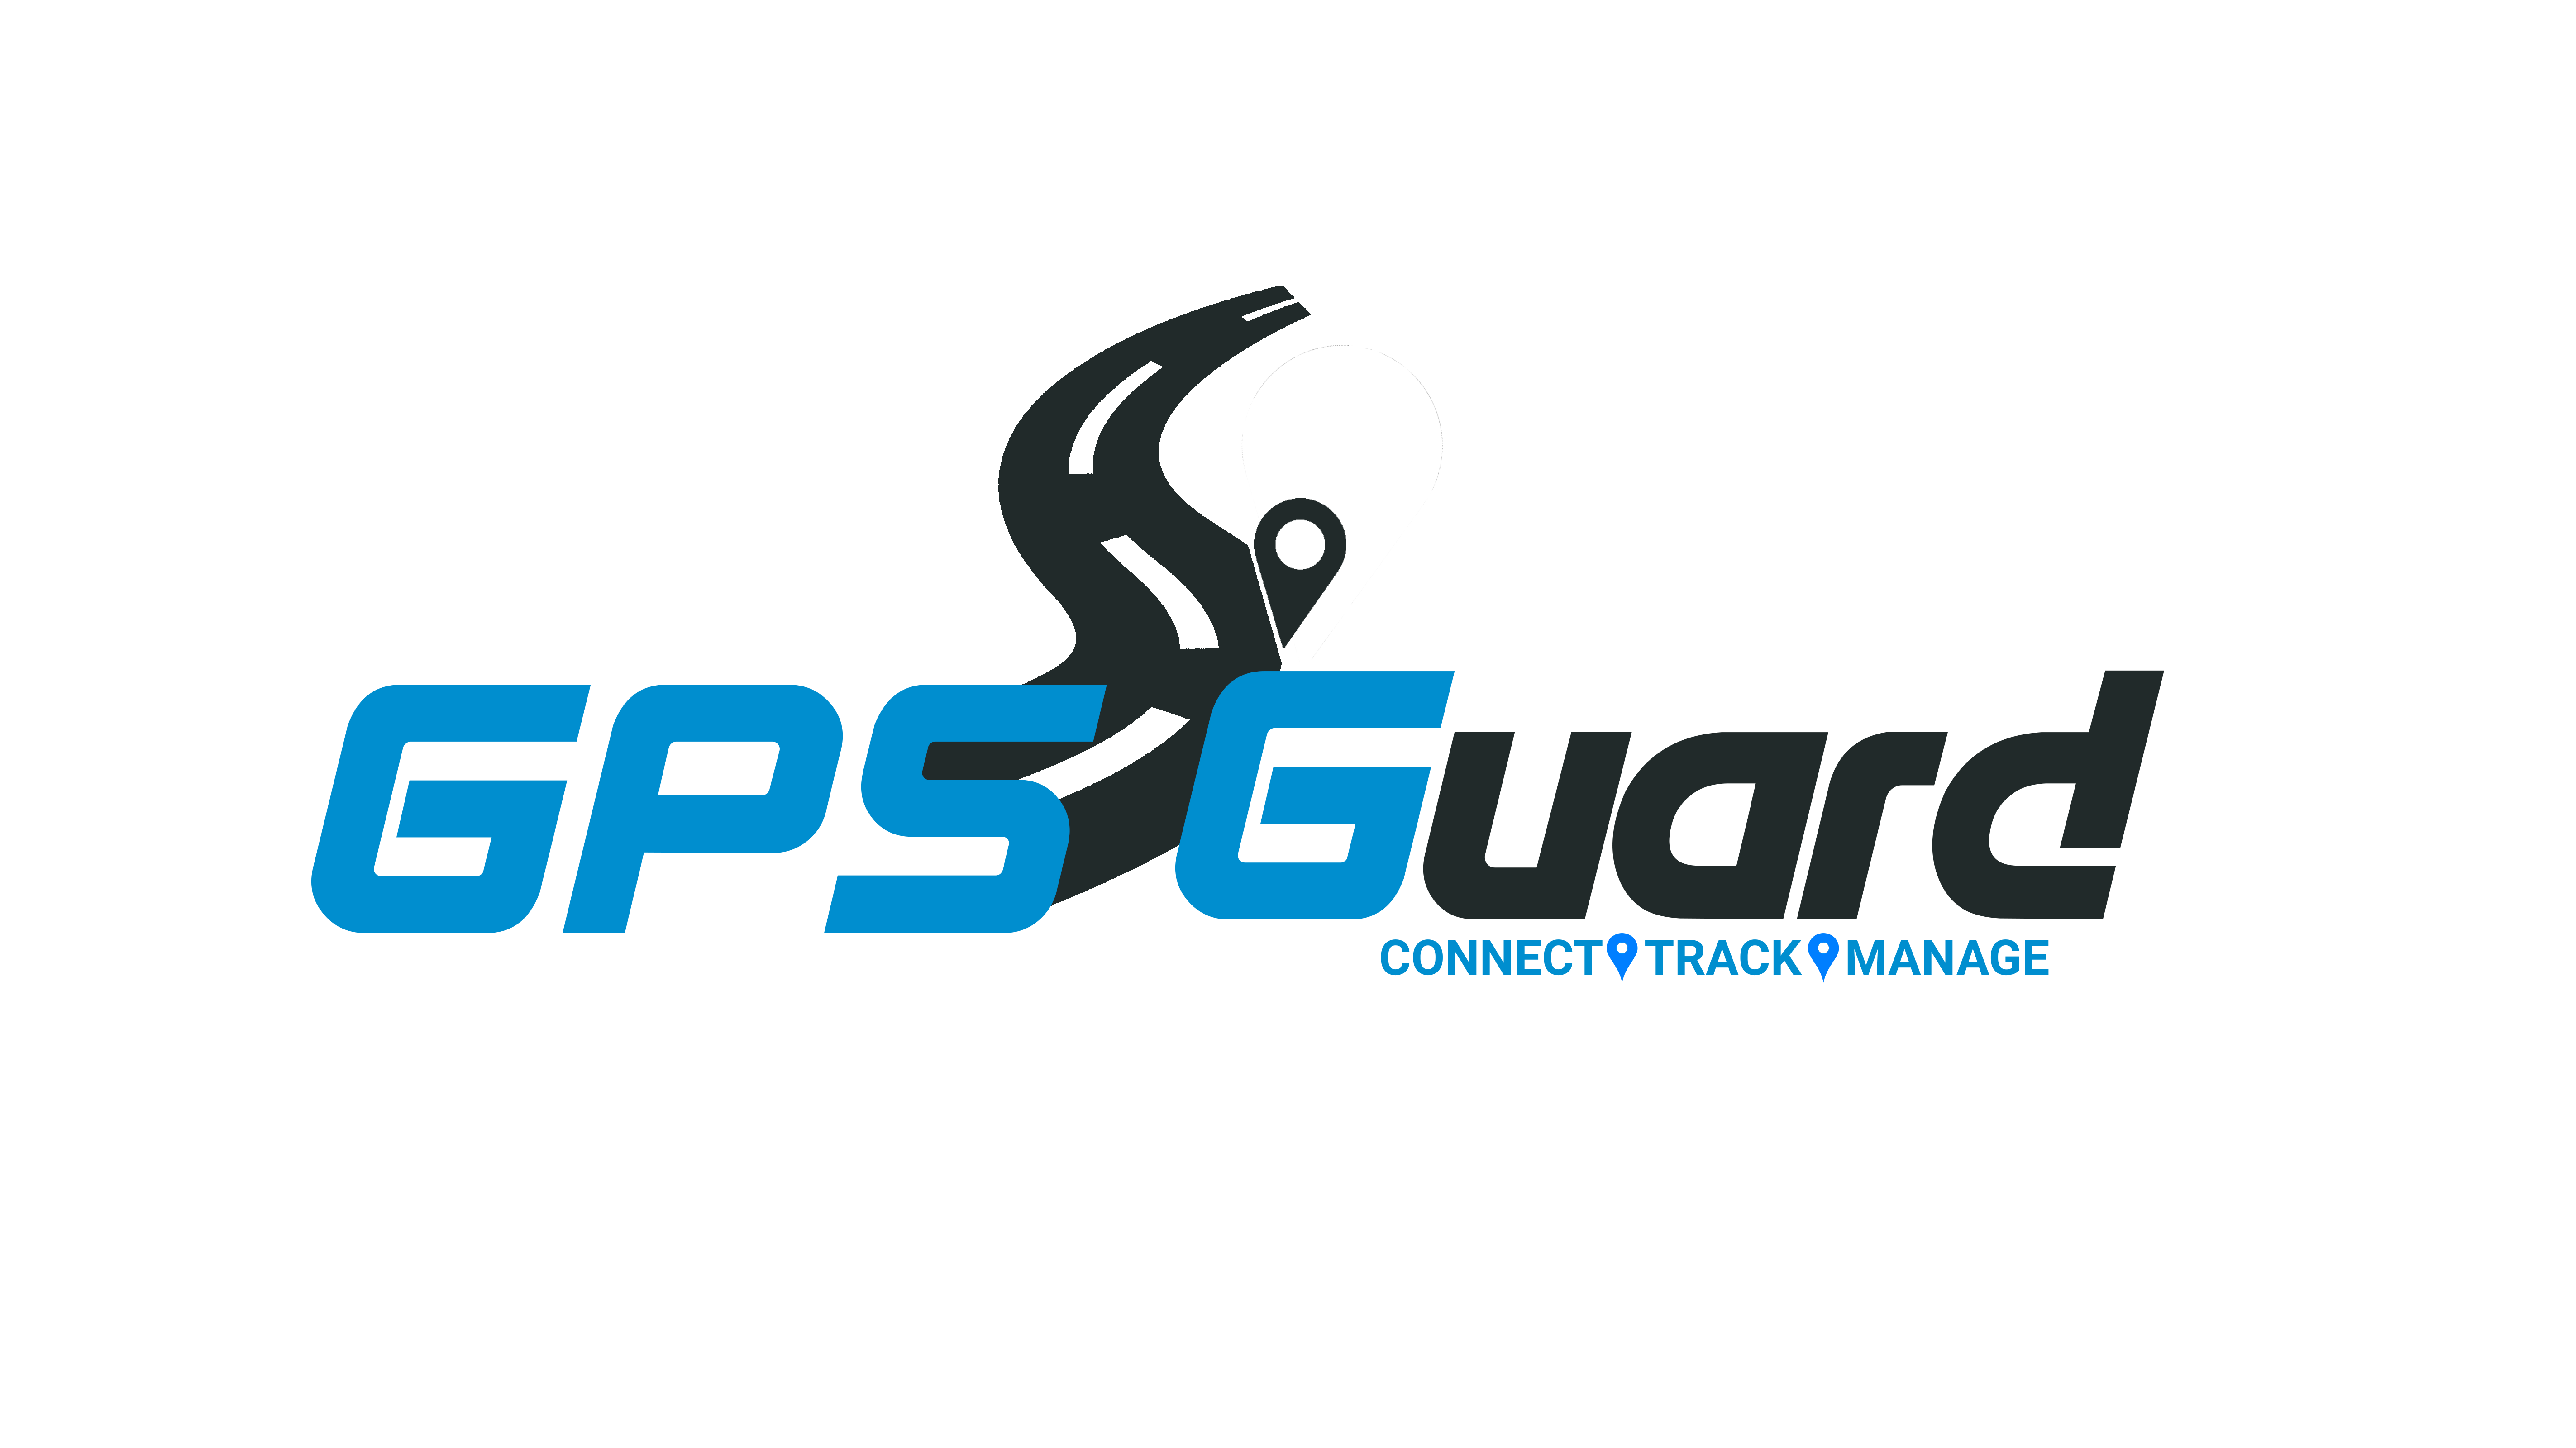 GPS Guard